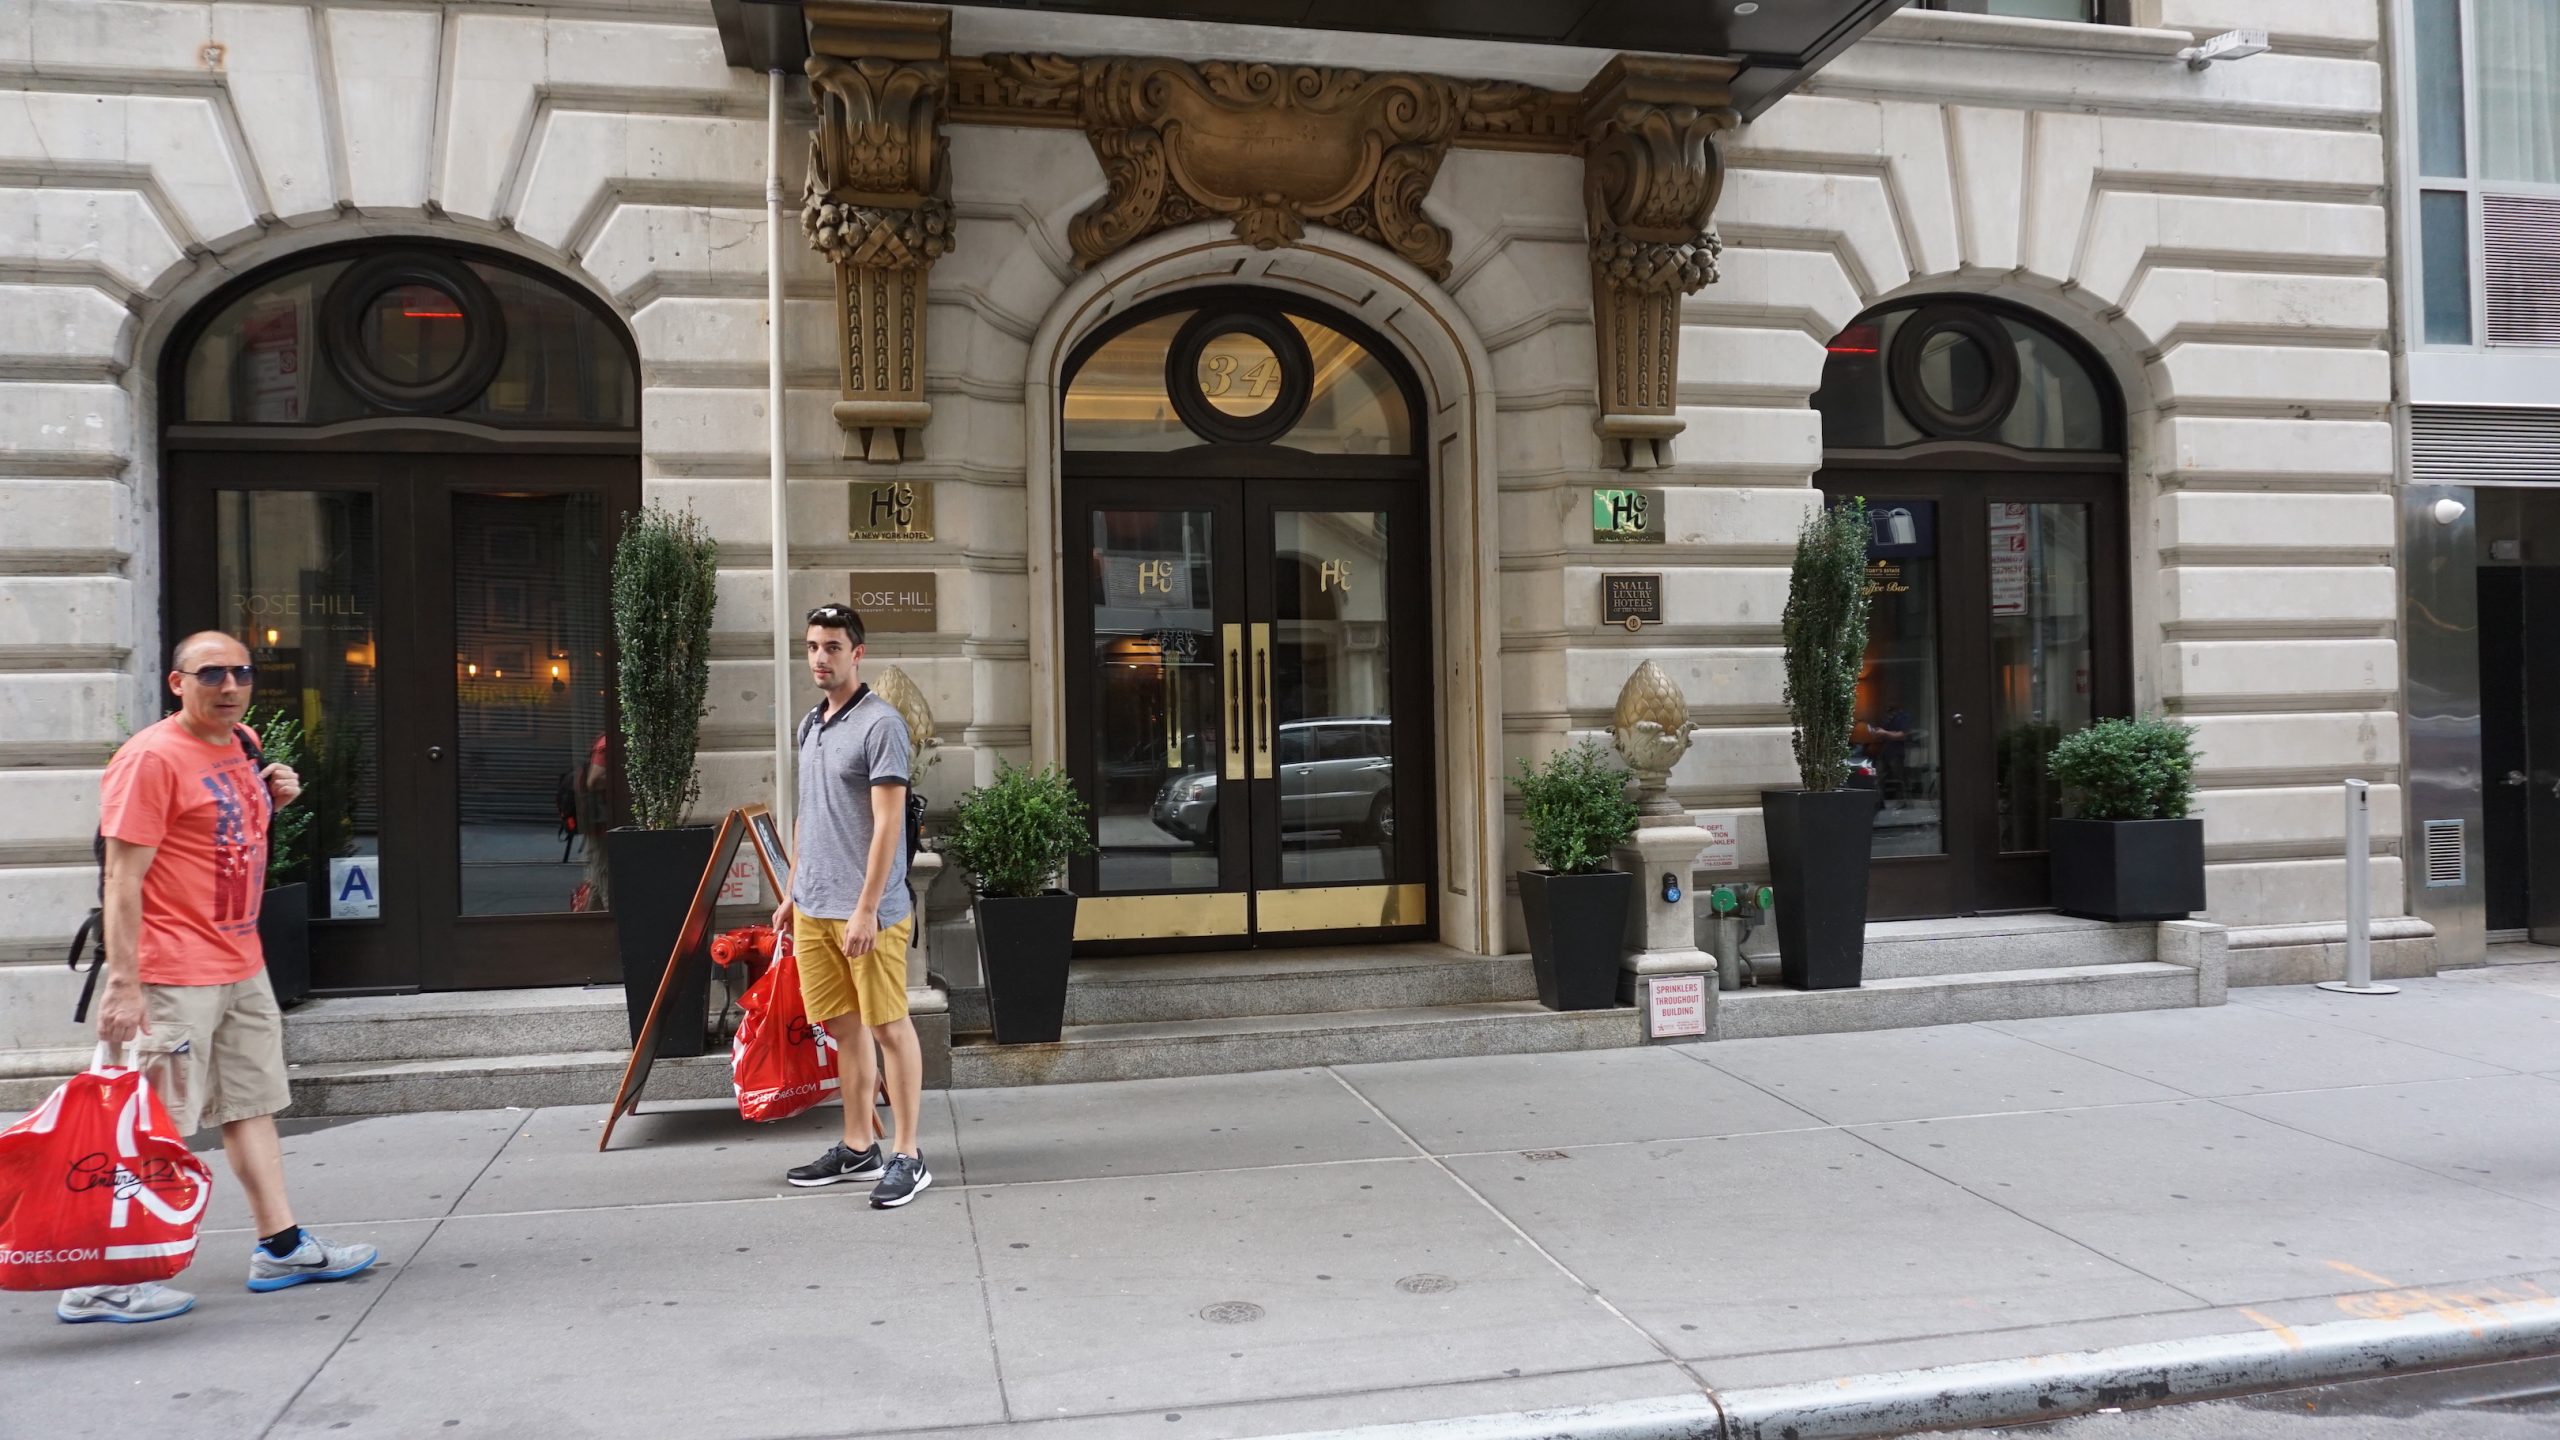 HGU New York Hotel Nova Iorque 9 Scaled 